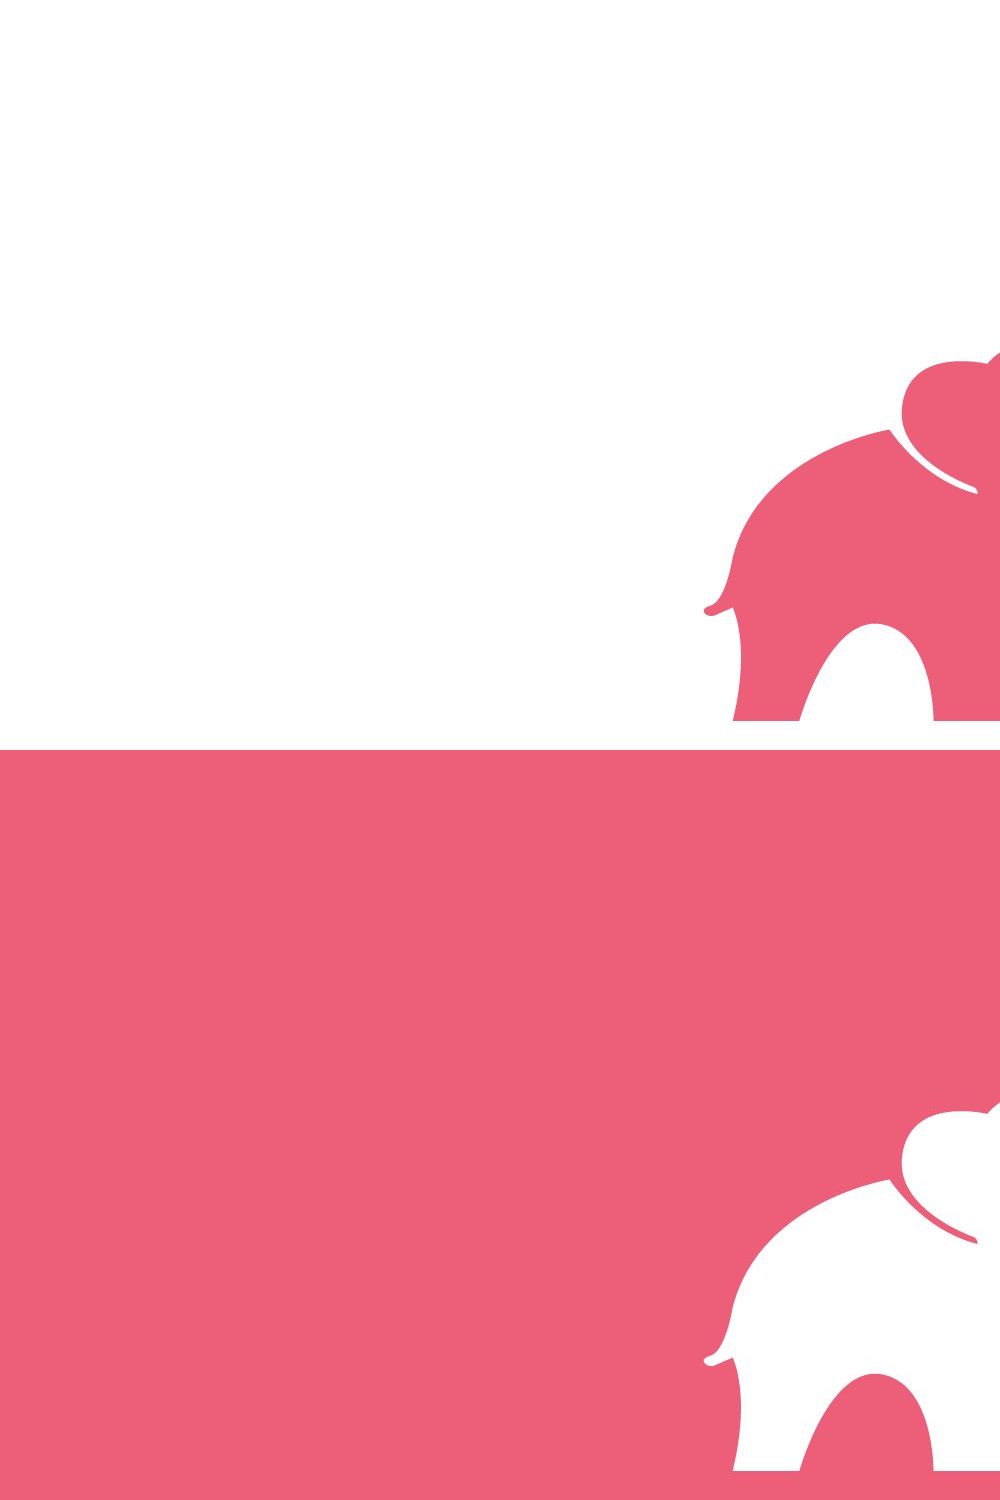 Elephant logo design pinterest preview image.